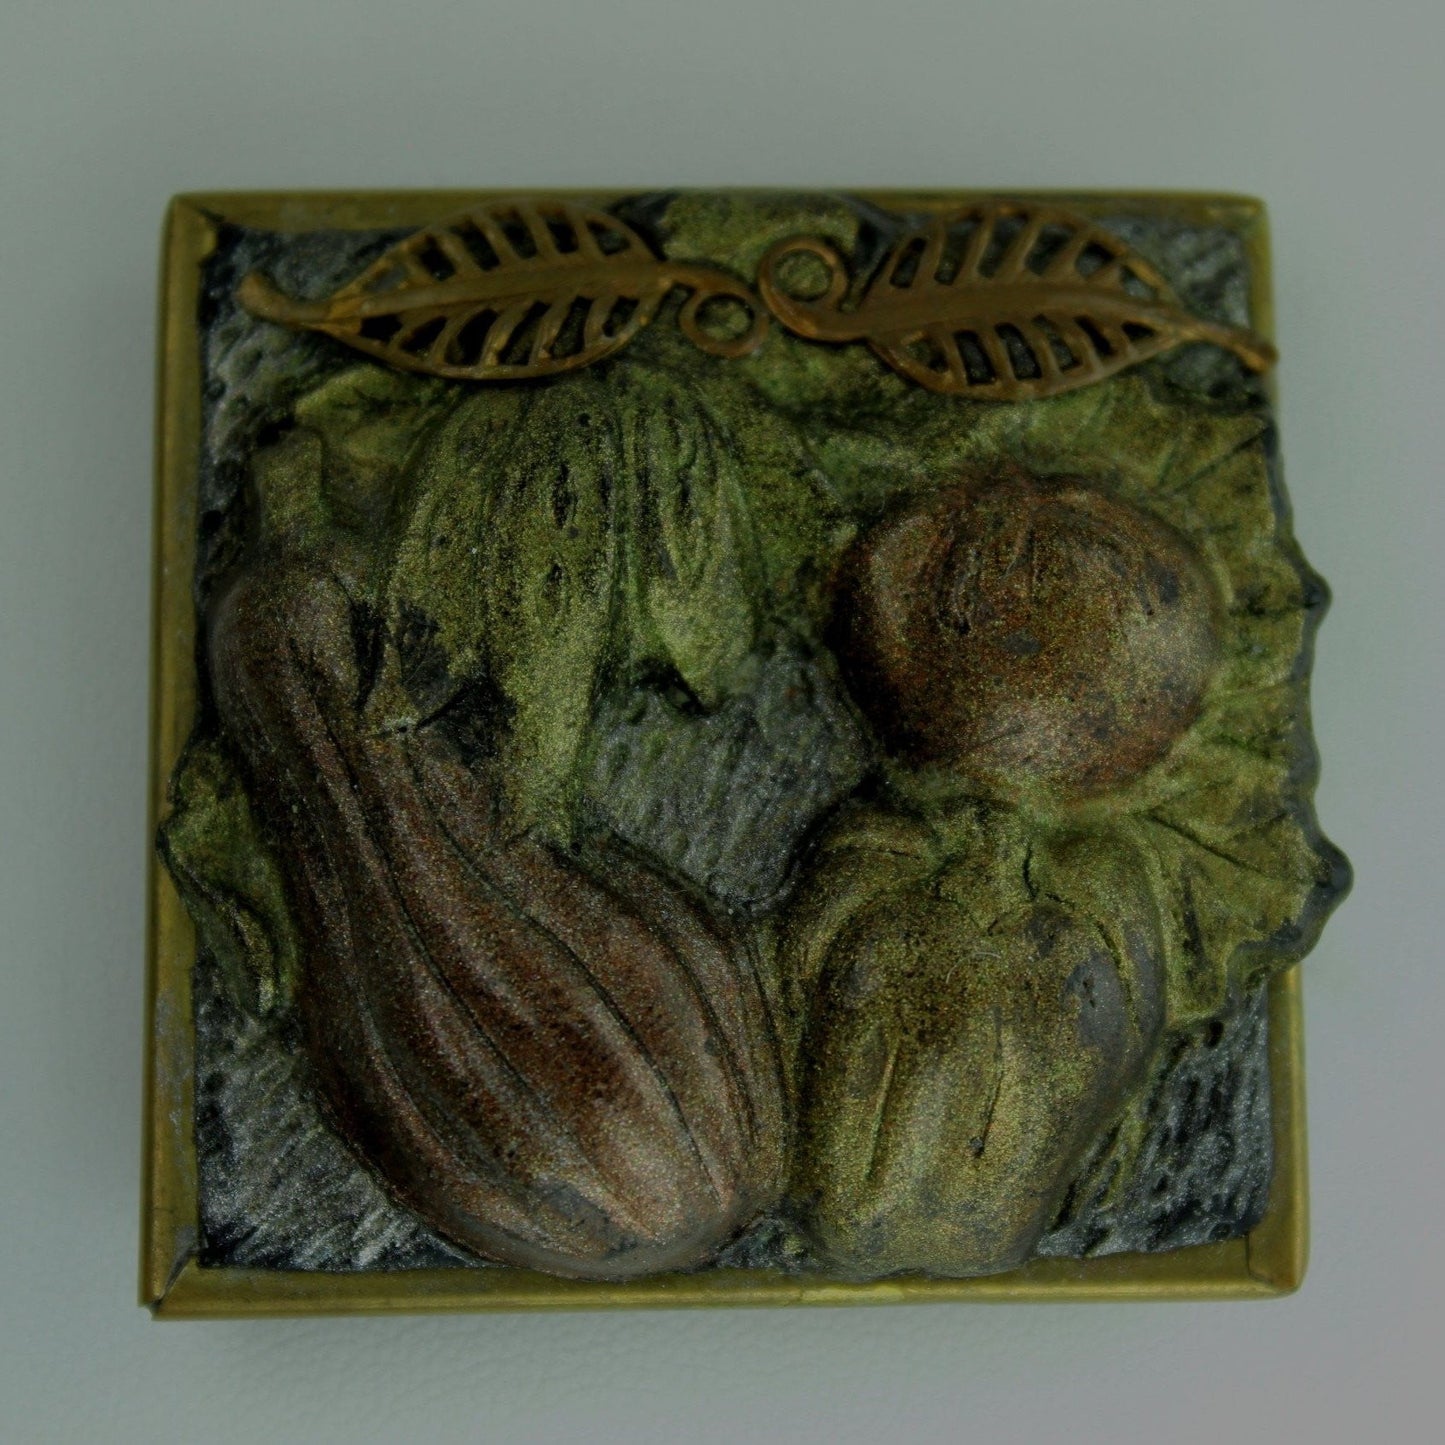 Artisan Vegetable Pin Brooch - Metallic Clay on Glass Eggplant Pepper 2" Square OOAK